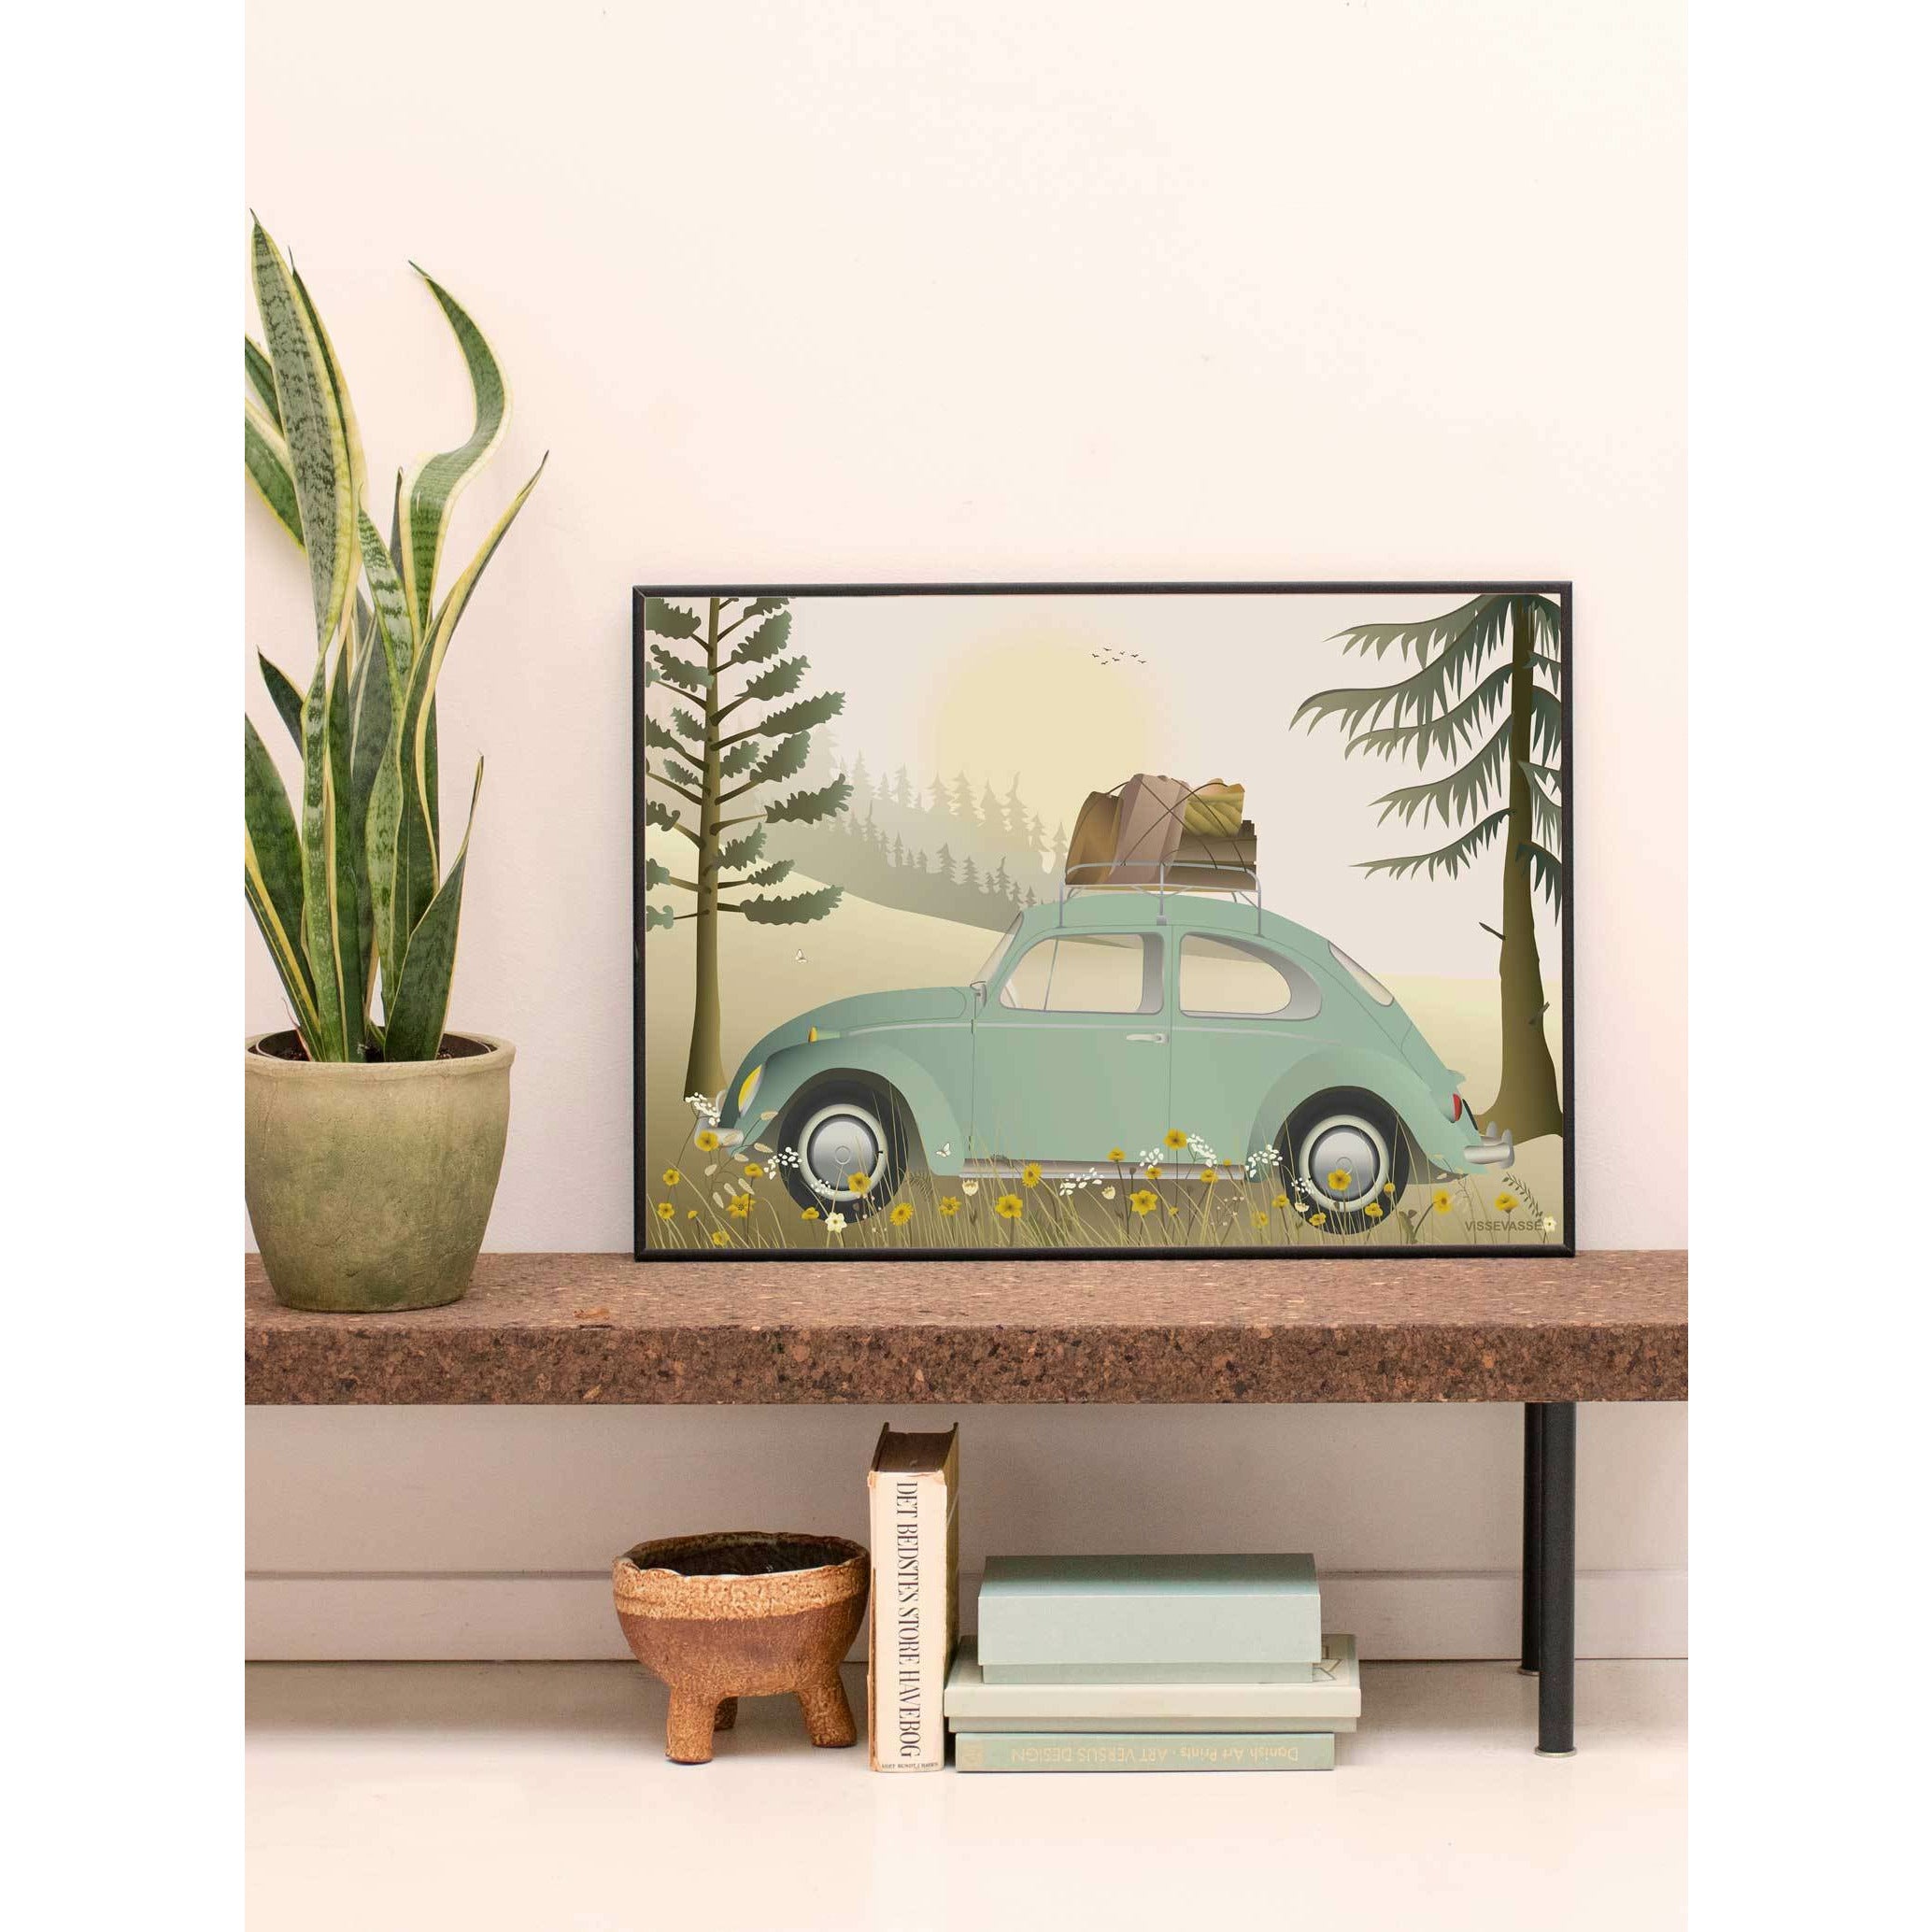 Vissevasse VW Beetle Green Poster, 15x21 cm